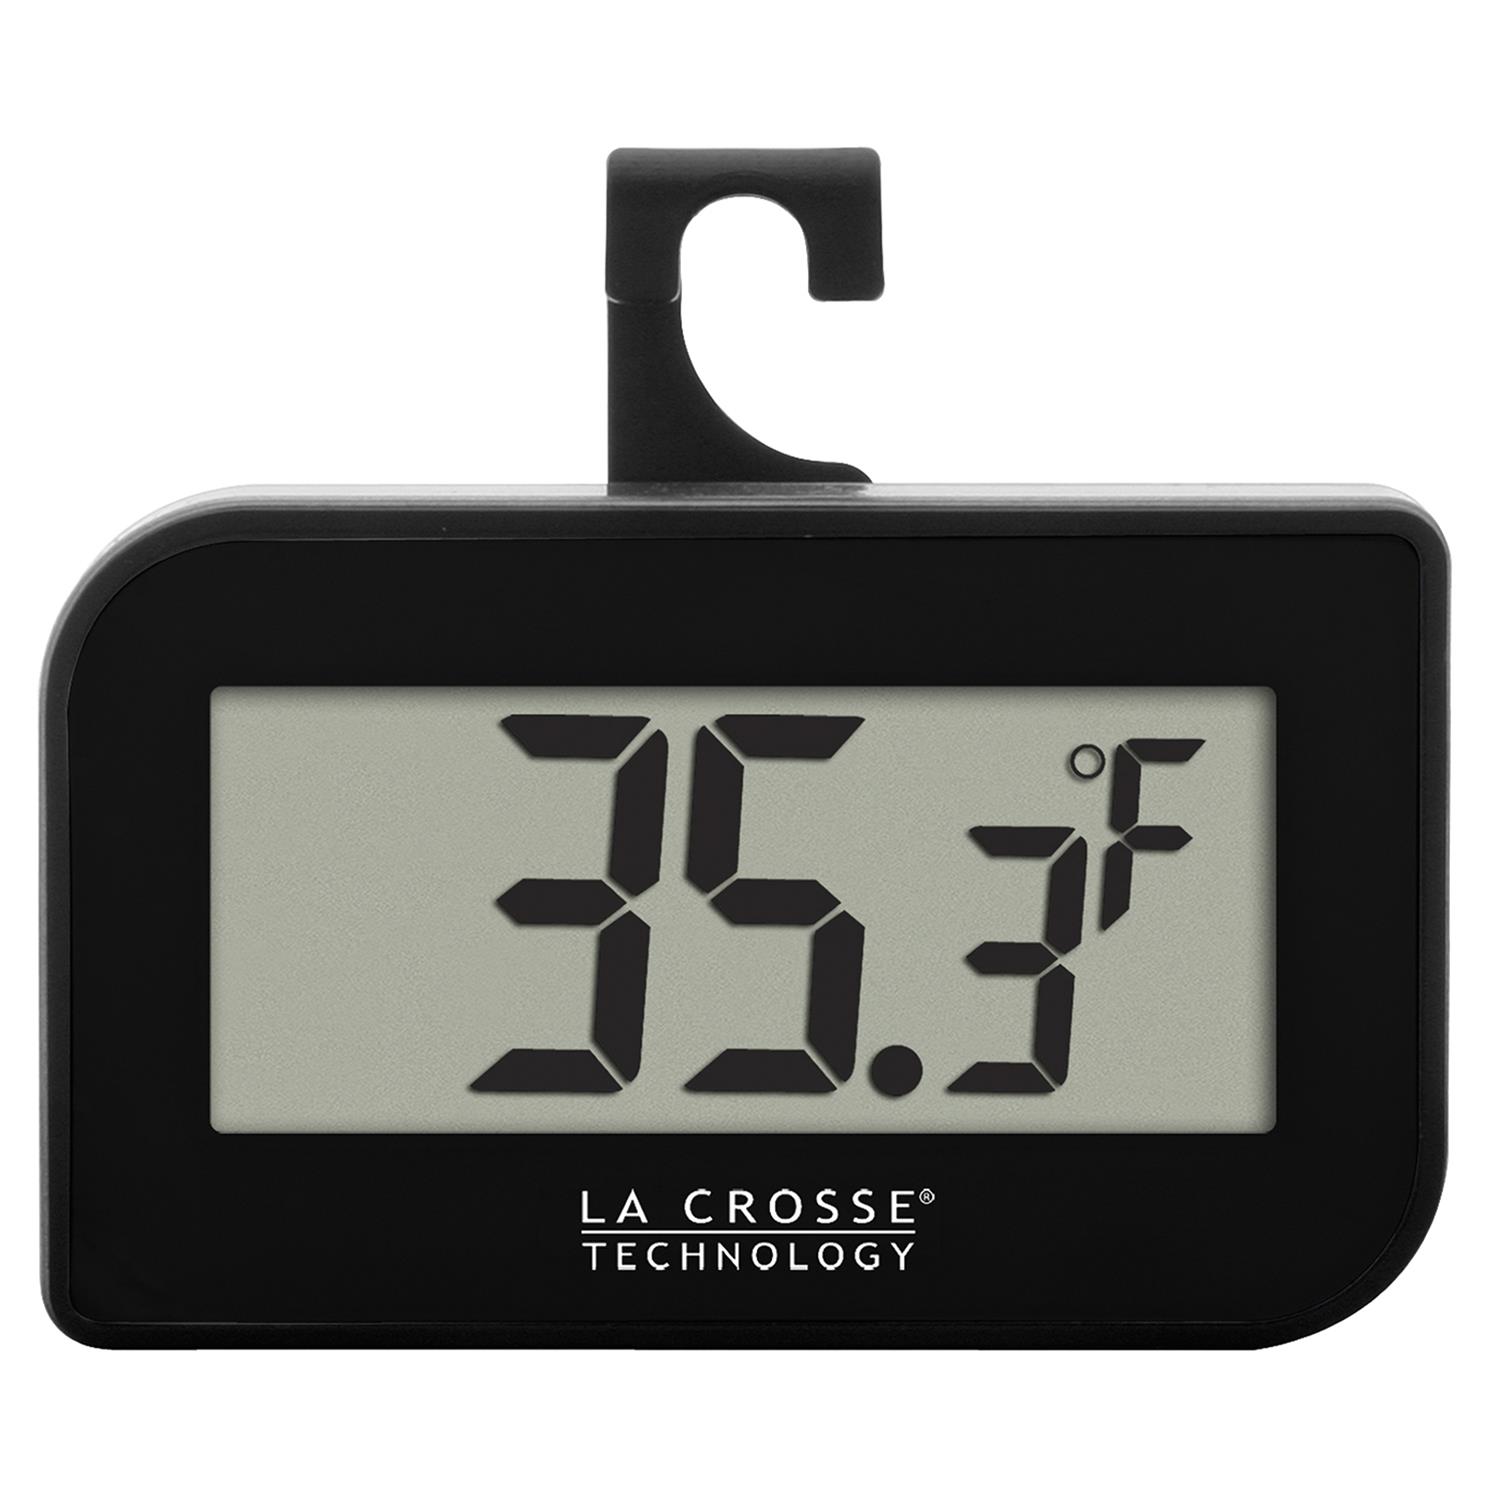 Fridge/Freezer Alarm Thermometer with Max/Min Function